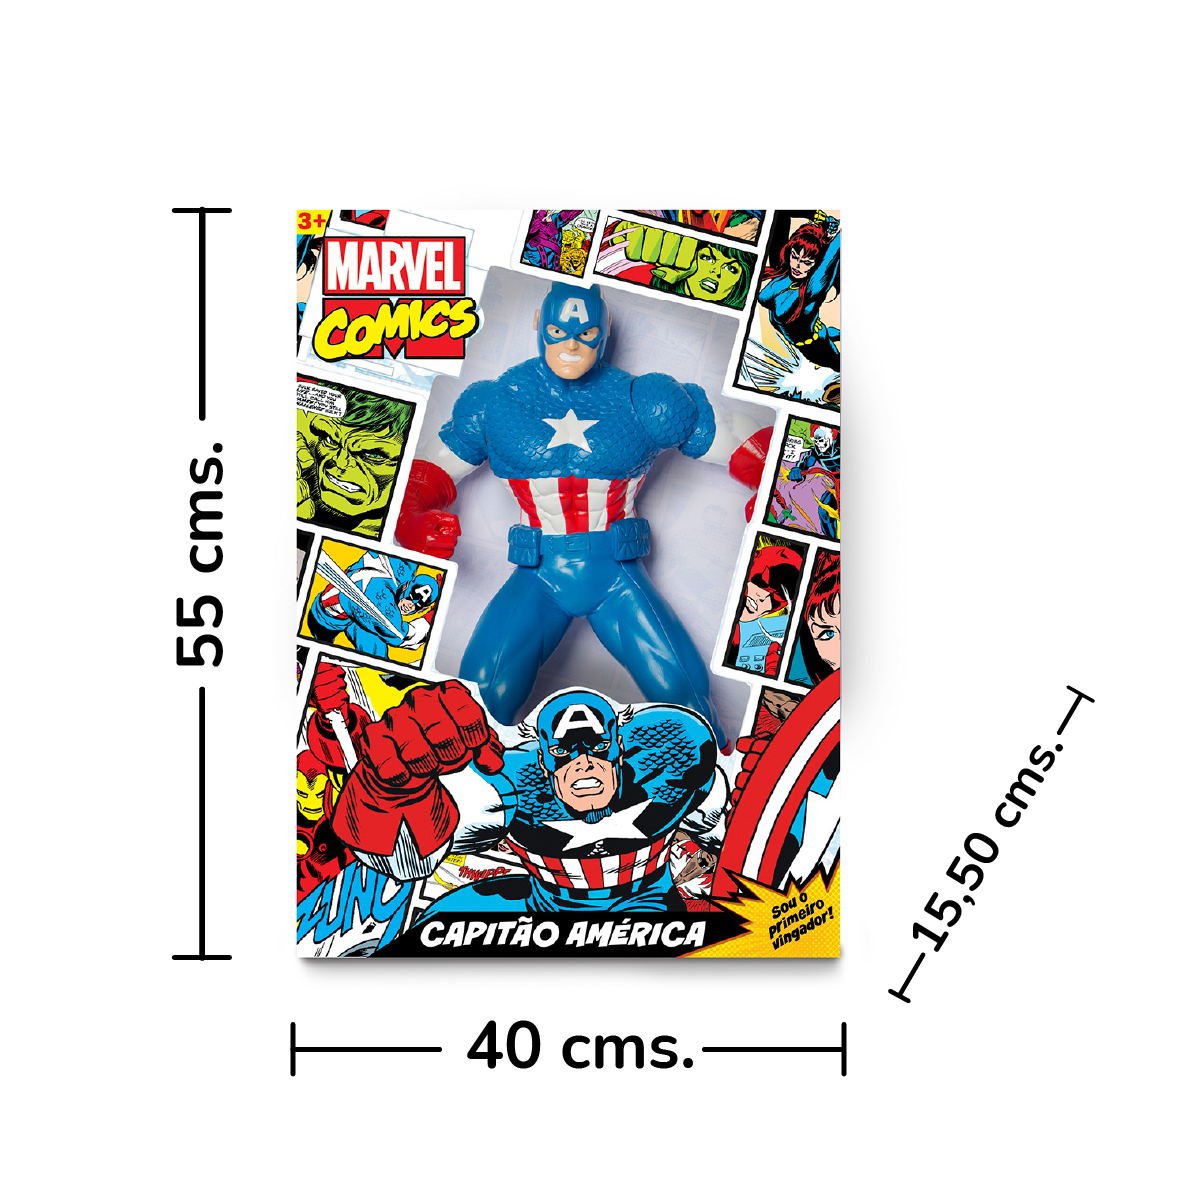 Capitán América Articulado Comics 52 cms. Avengers